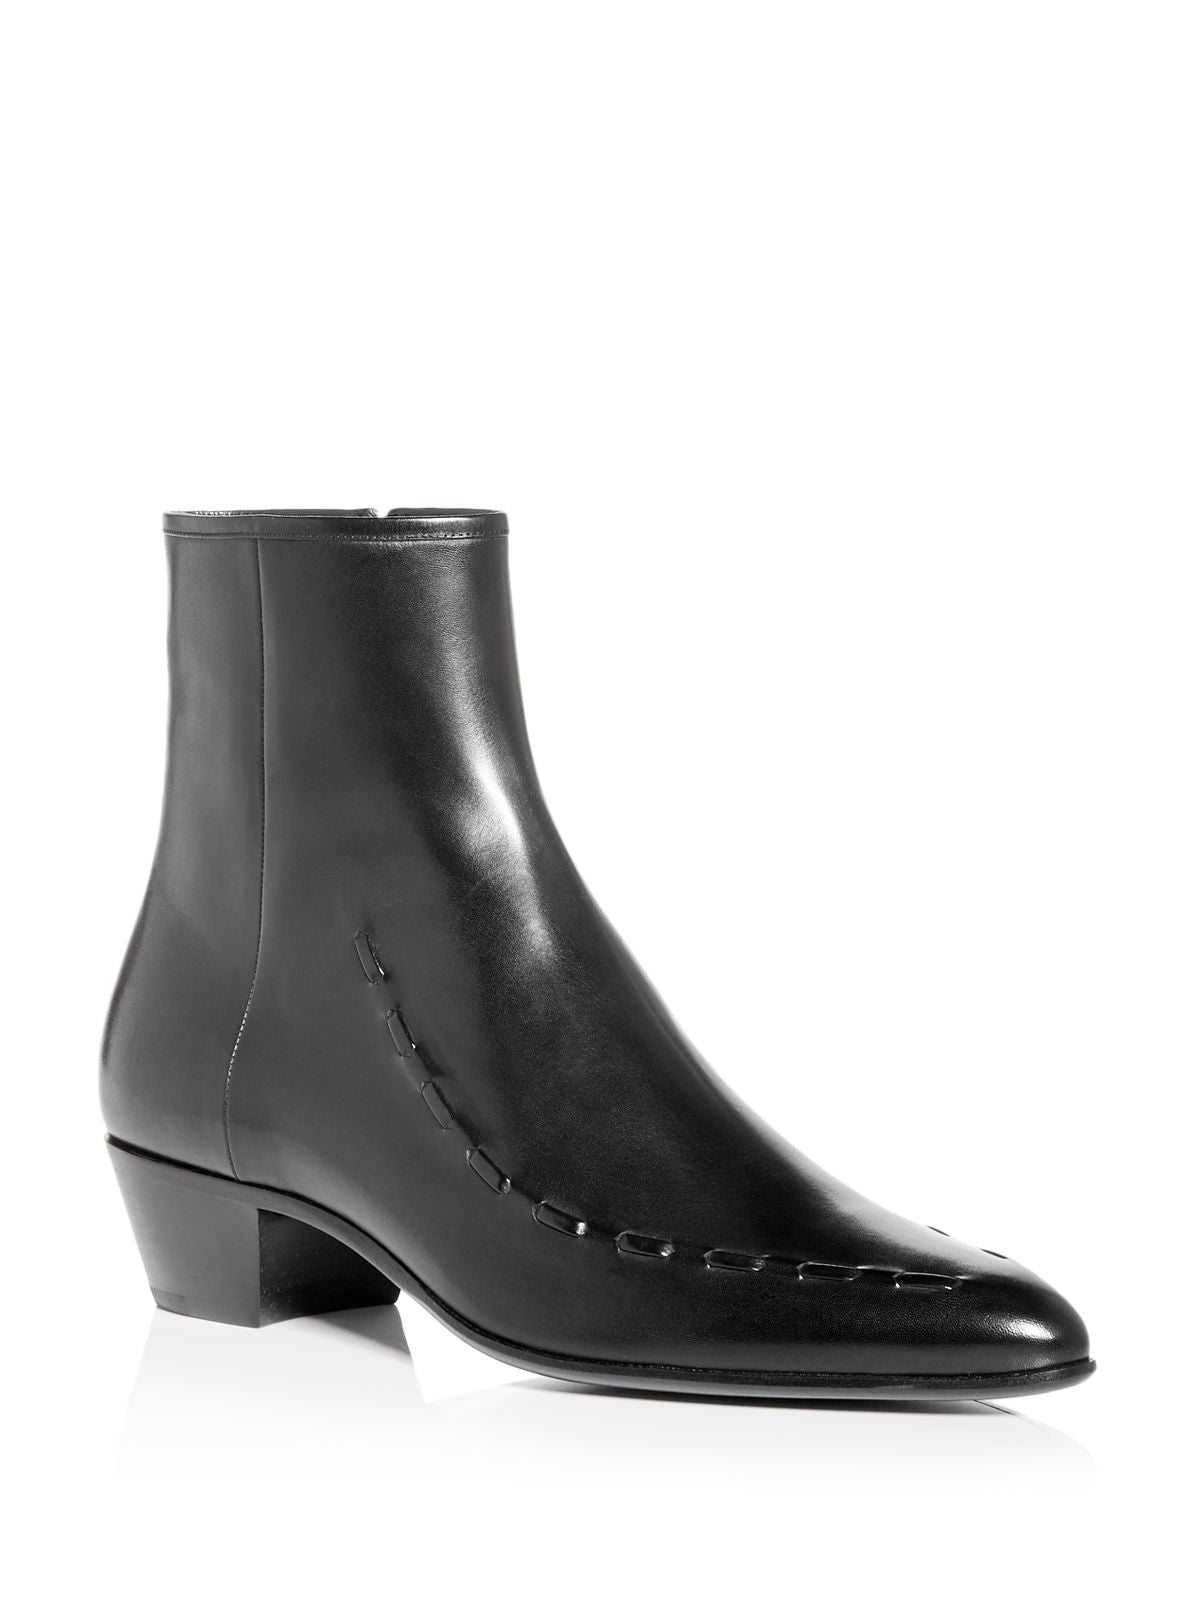 SAINT LAURENT Mens Black Comfort Casey Pointed Toe Zip-Up Leather Boots Shoes 41